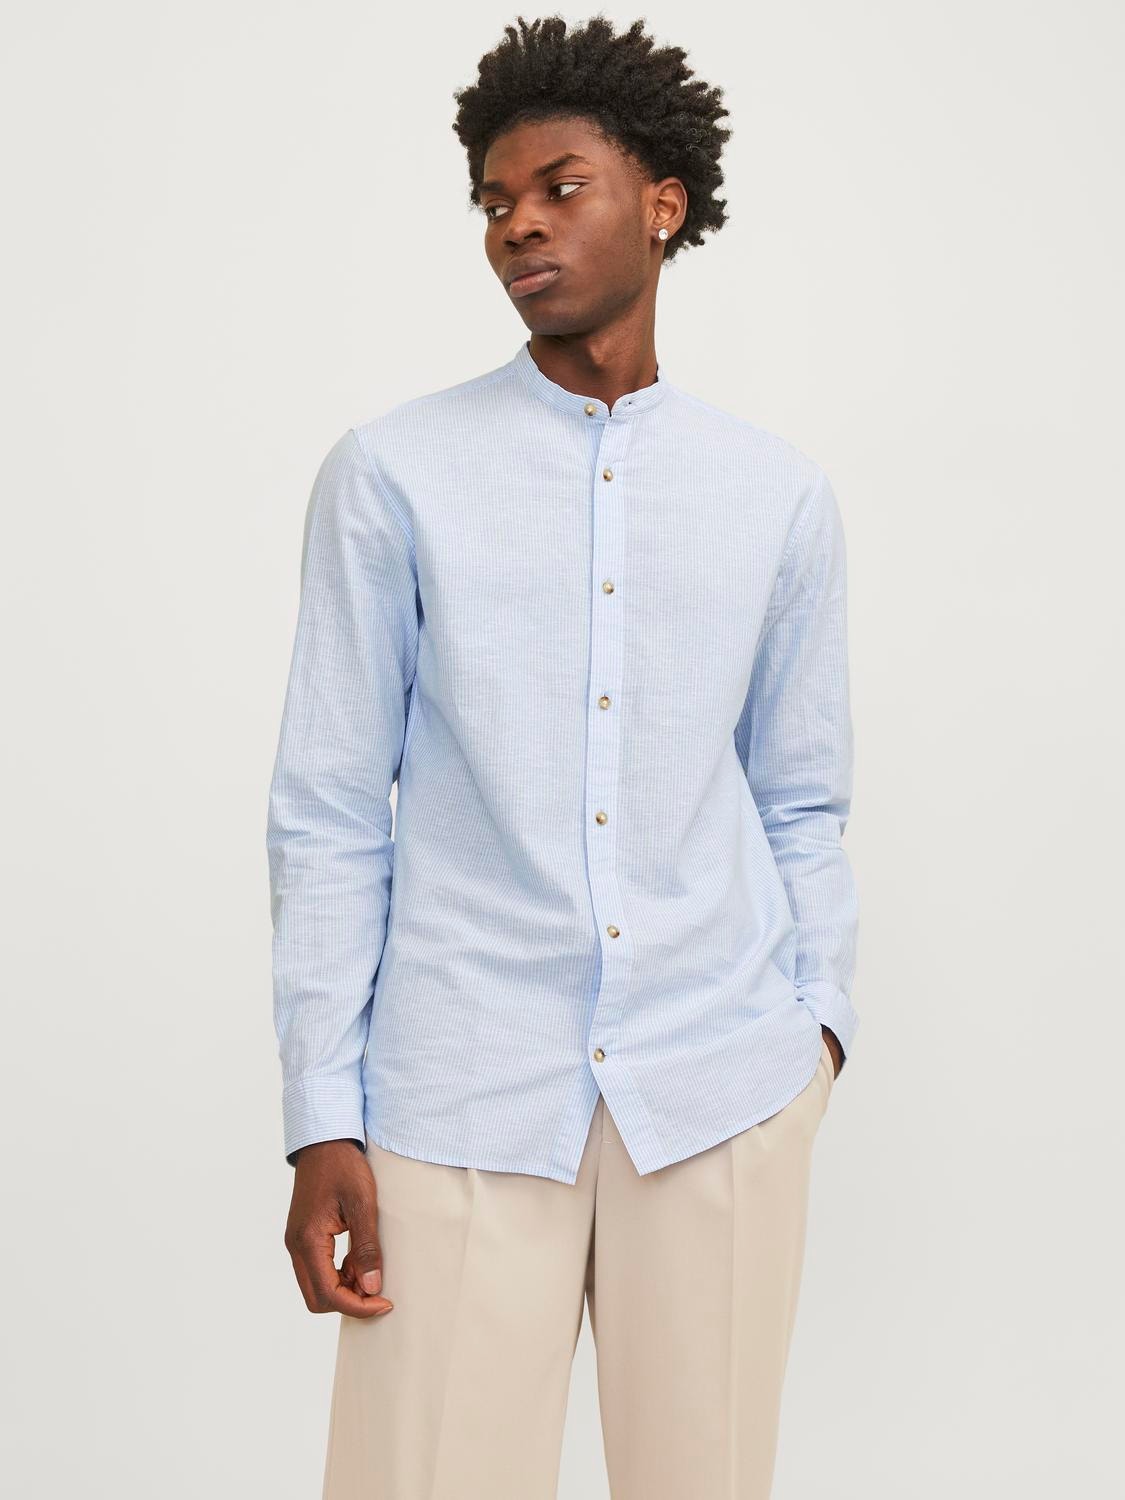 Jack & Jones Comfort Fit Shirt -Cashmere Blue - 12248385